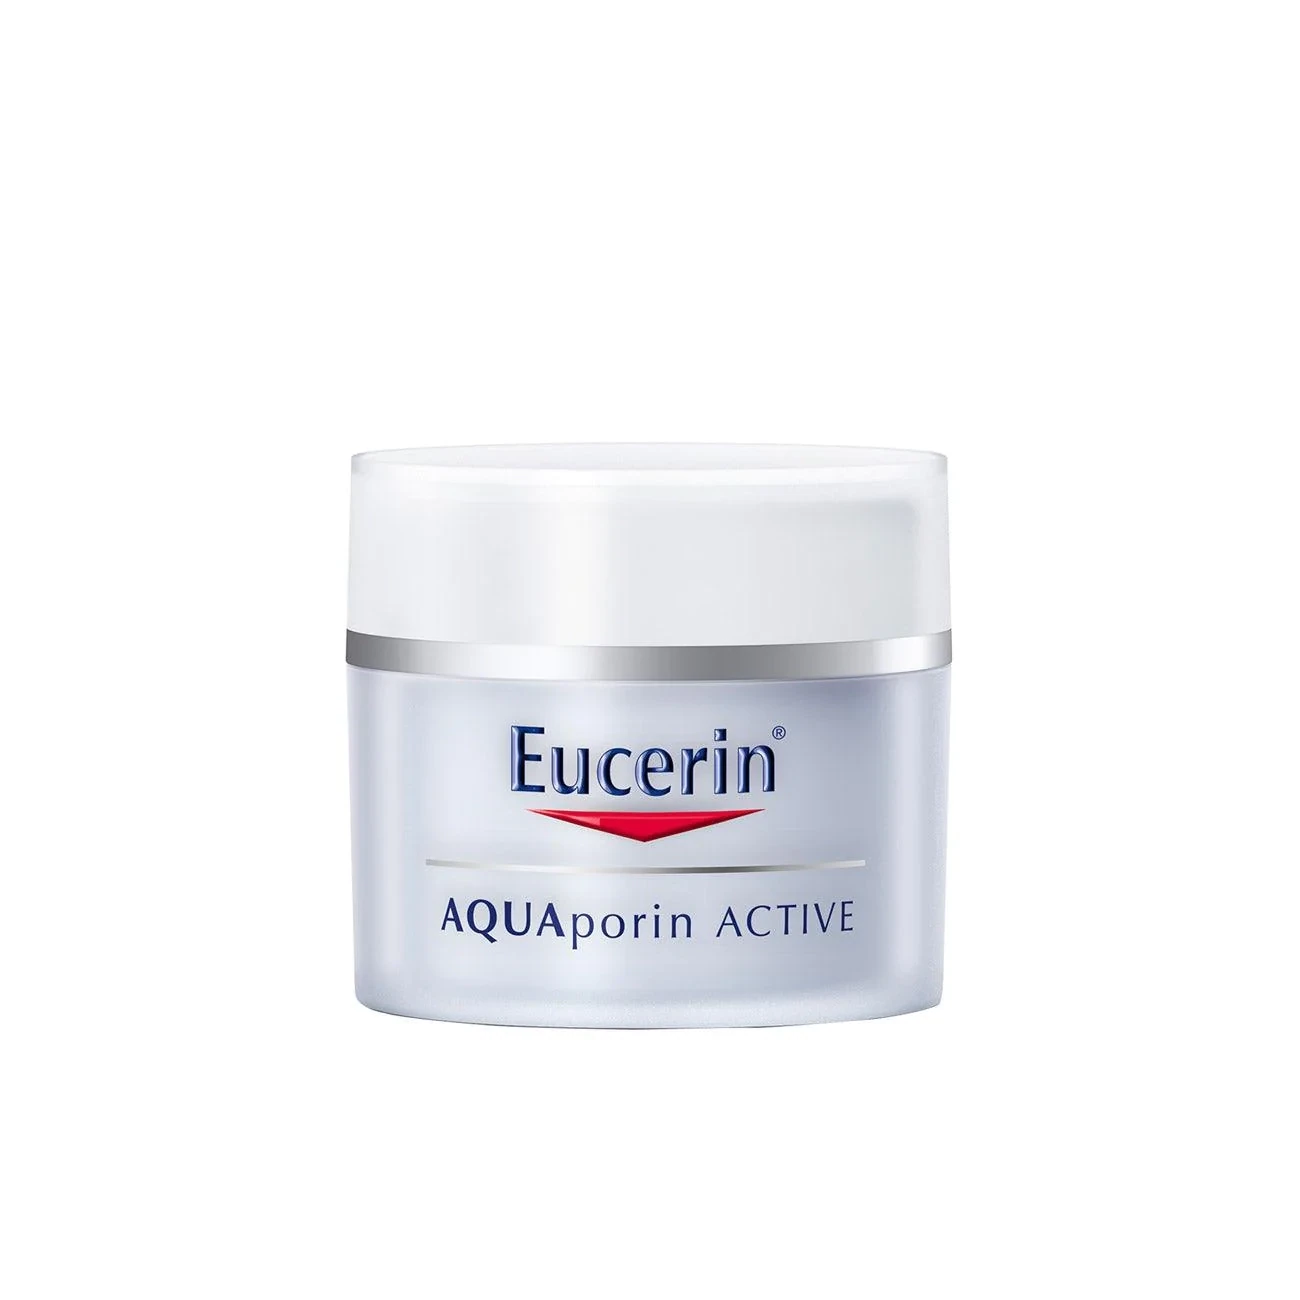 EUCERIN - Aquaporin Active - Normal to Combination Skin